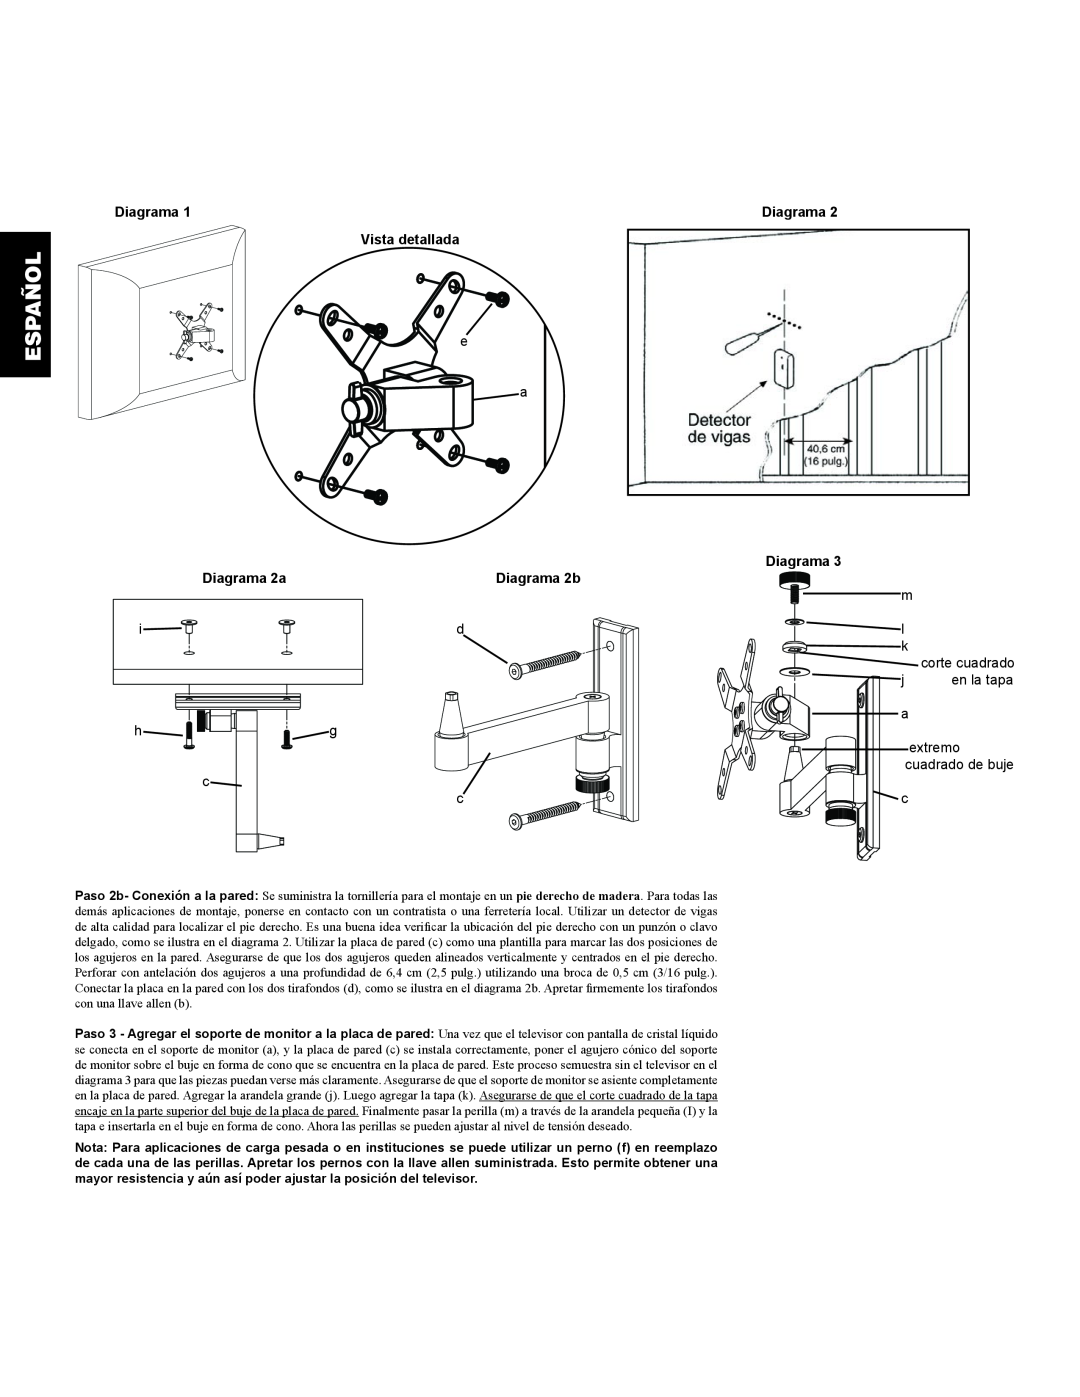 Sanus Systems VM2 manual Español, Vista detallada, Diagrama 2a 